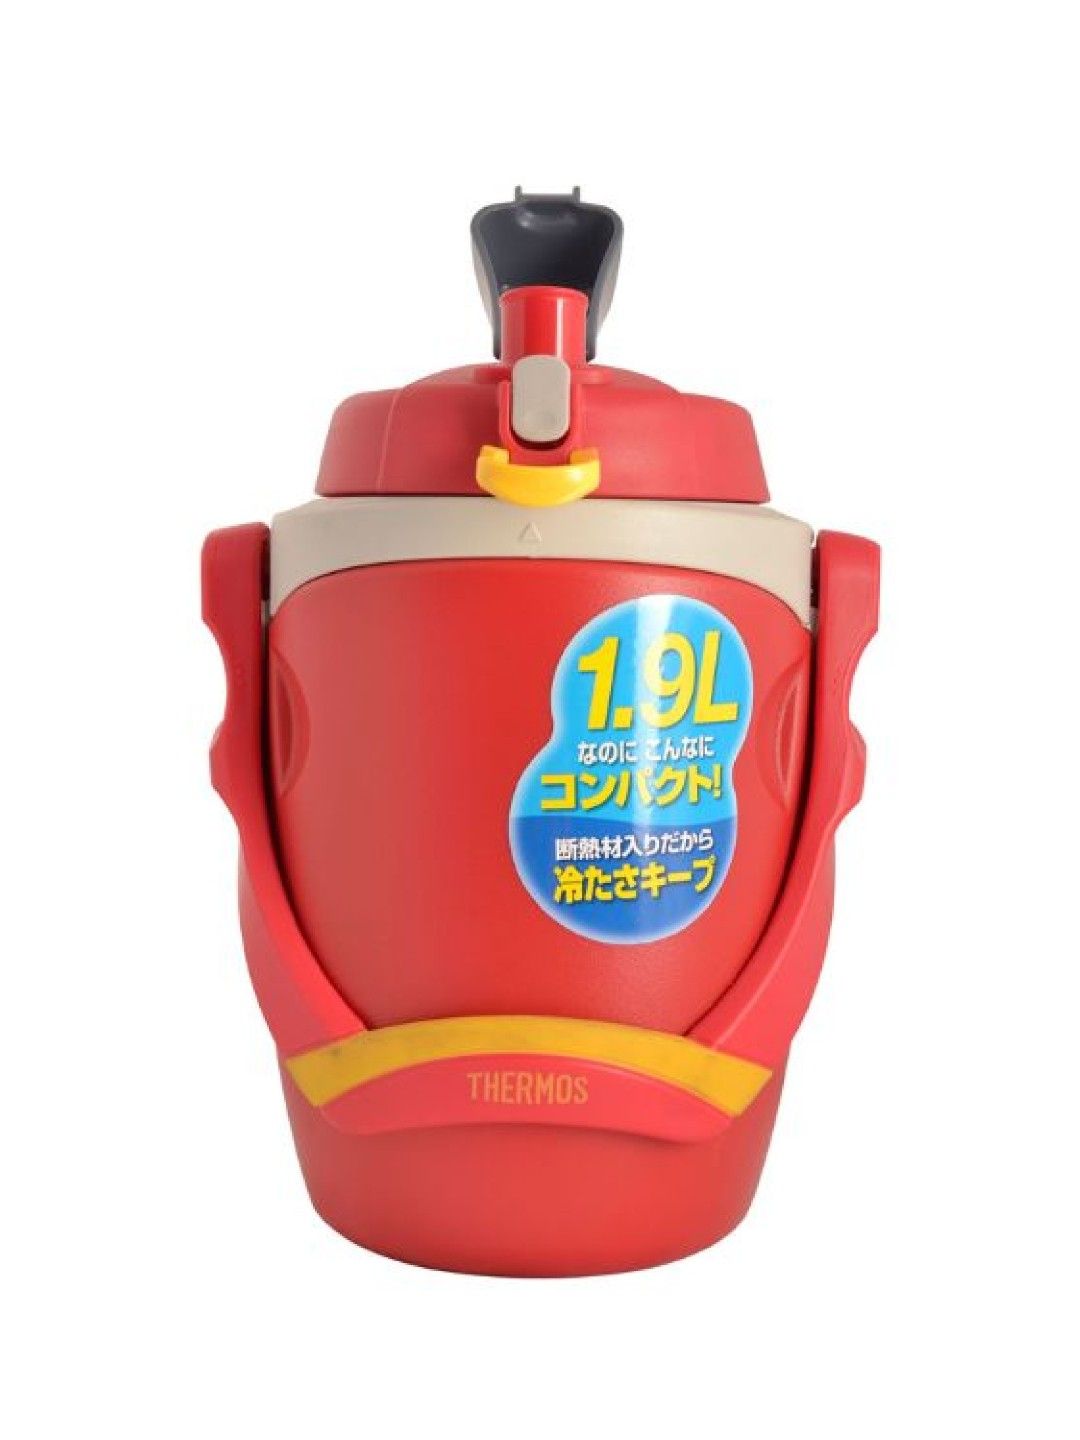 Thermos FPG-1901 Beverage Water Jug - Burning Red (1.9L)